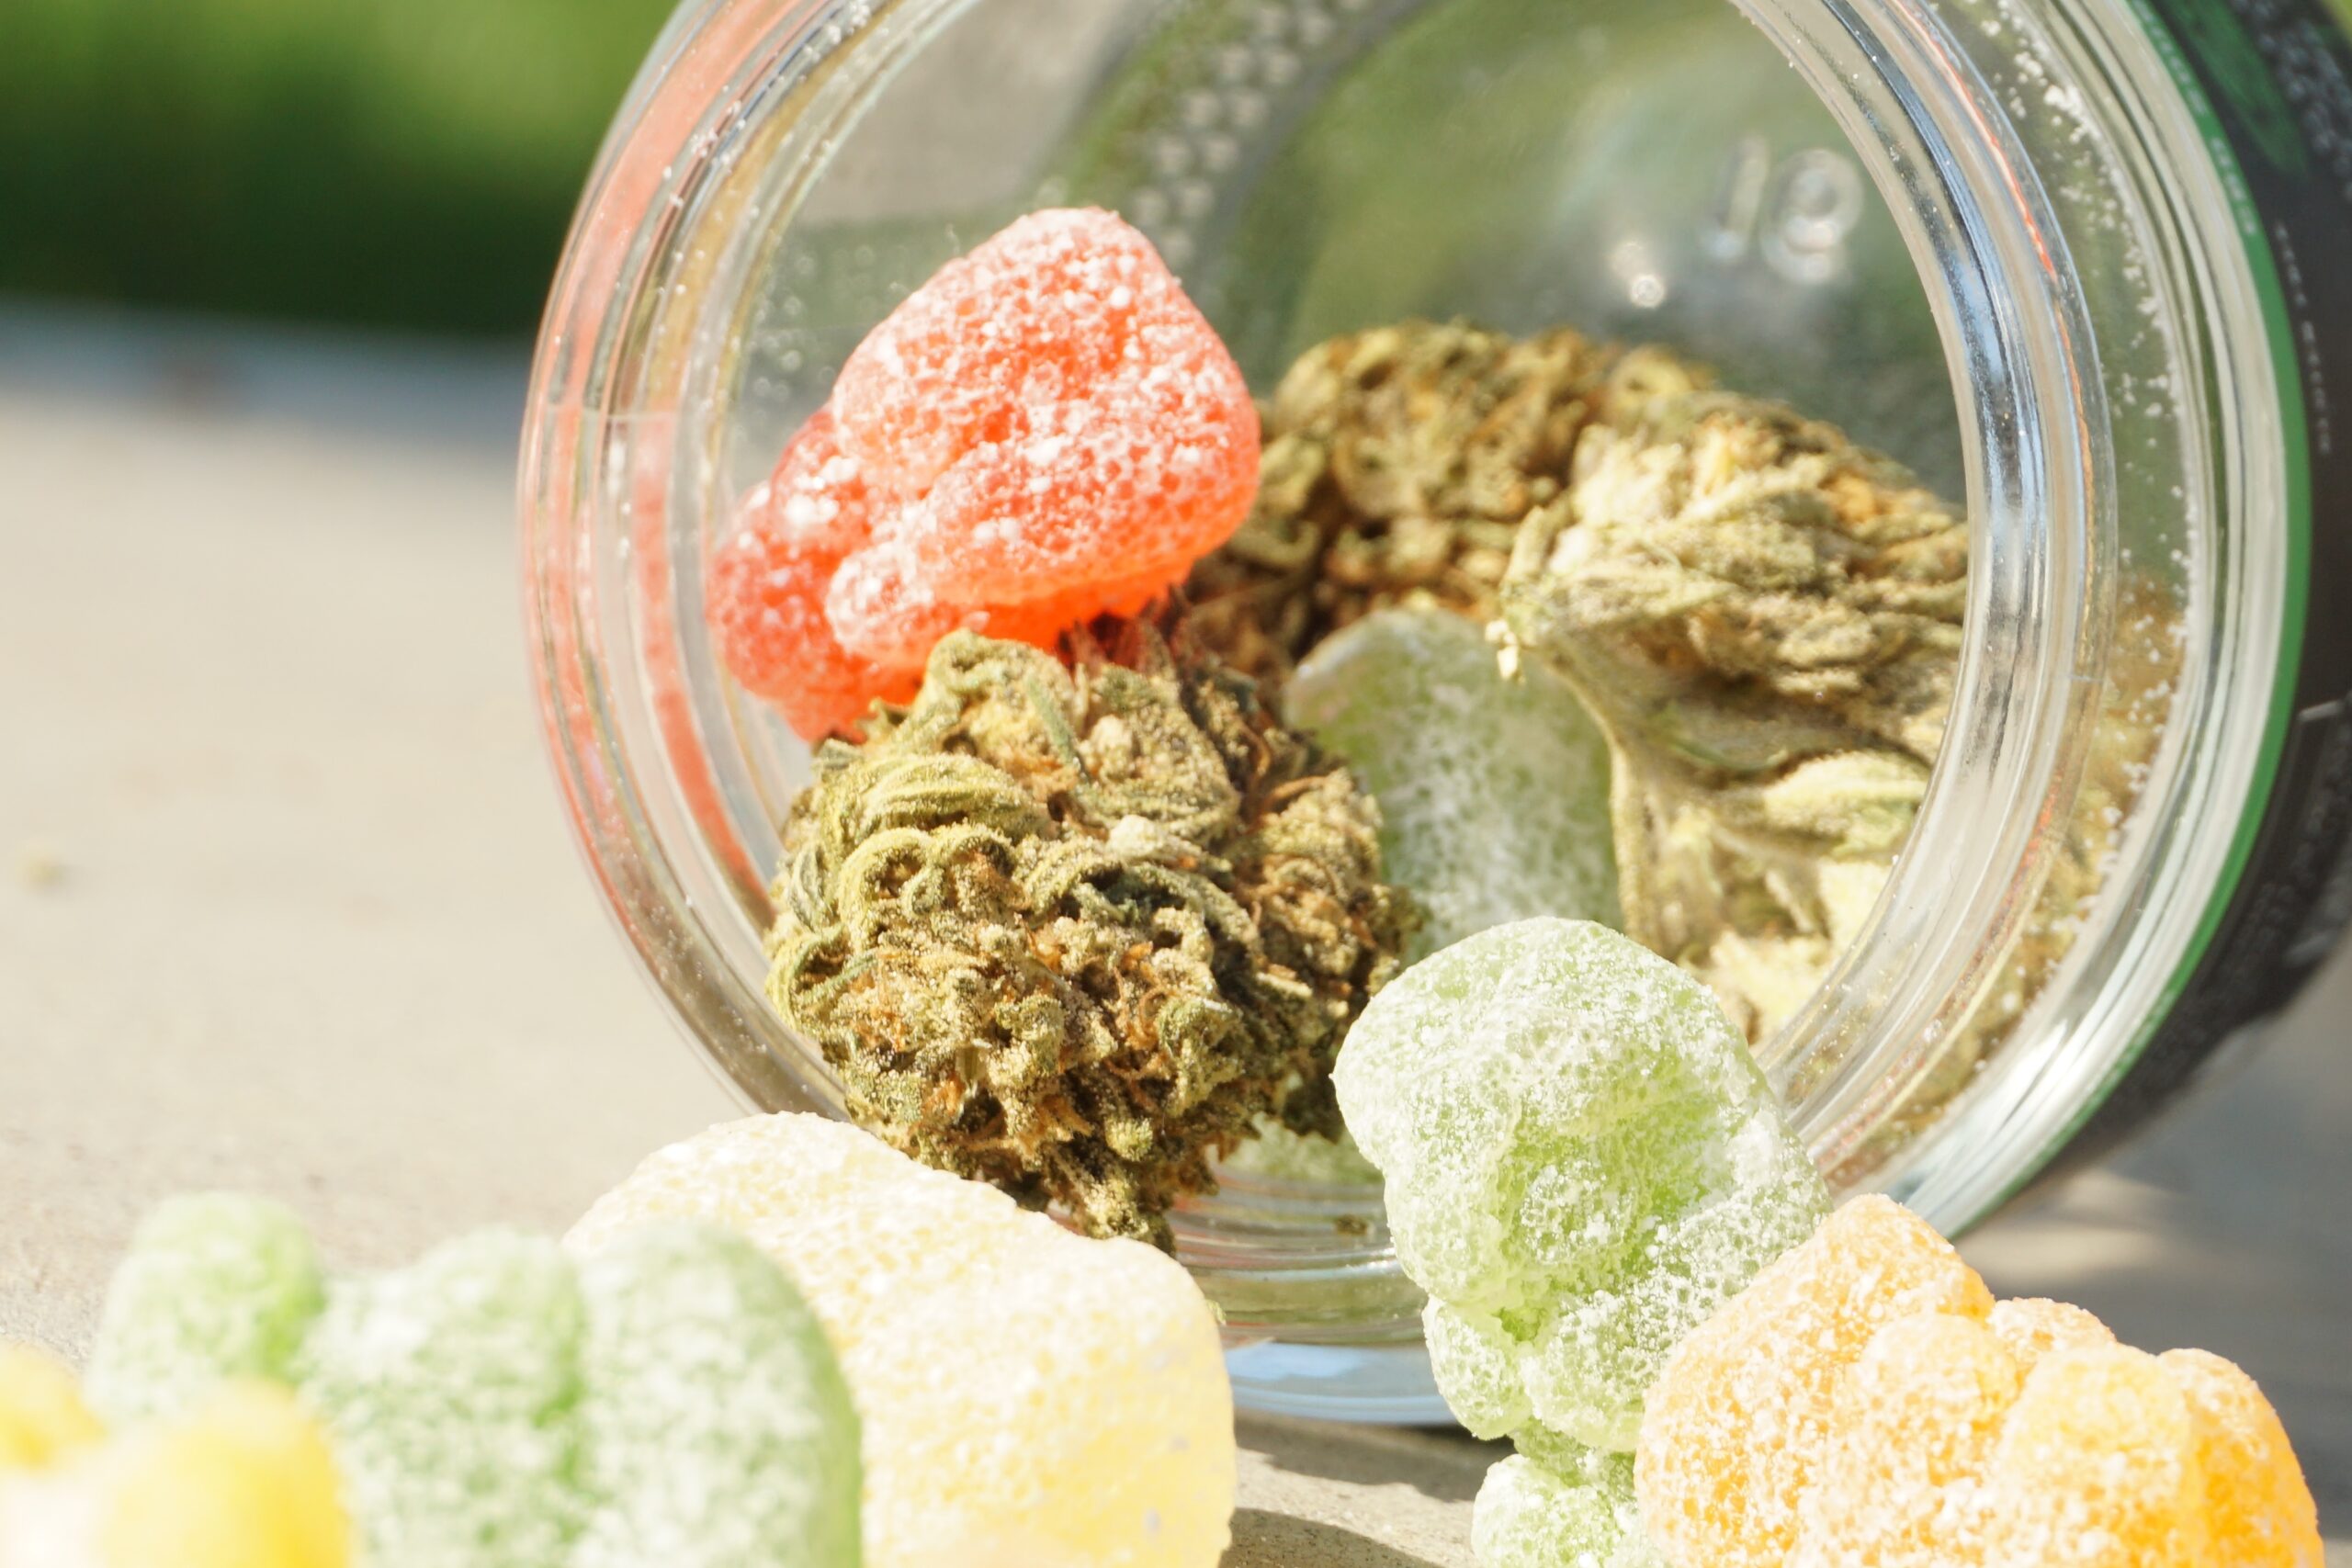 photo of cannabis flower and green and yellow cannabis edible gummies in clear mason jar